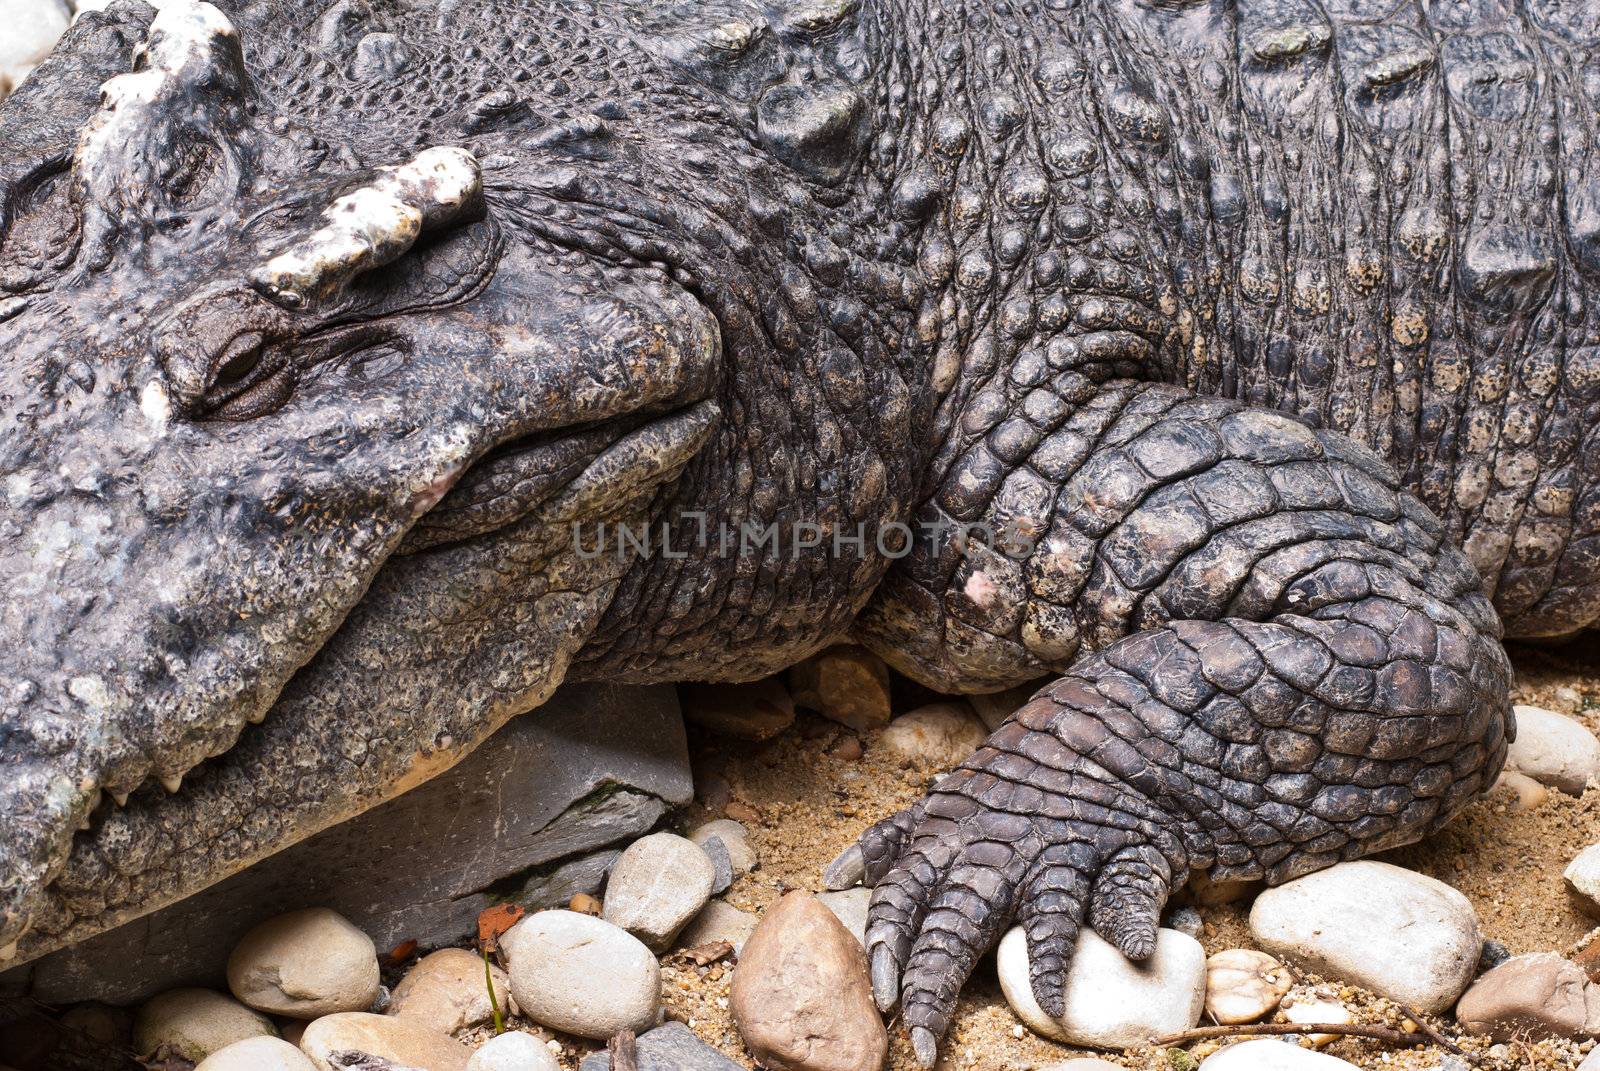 a large crocodile